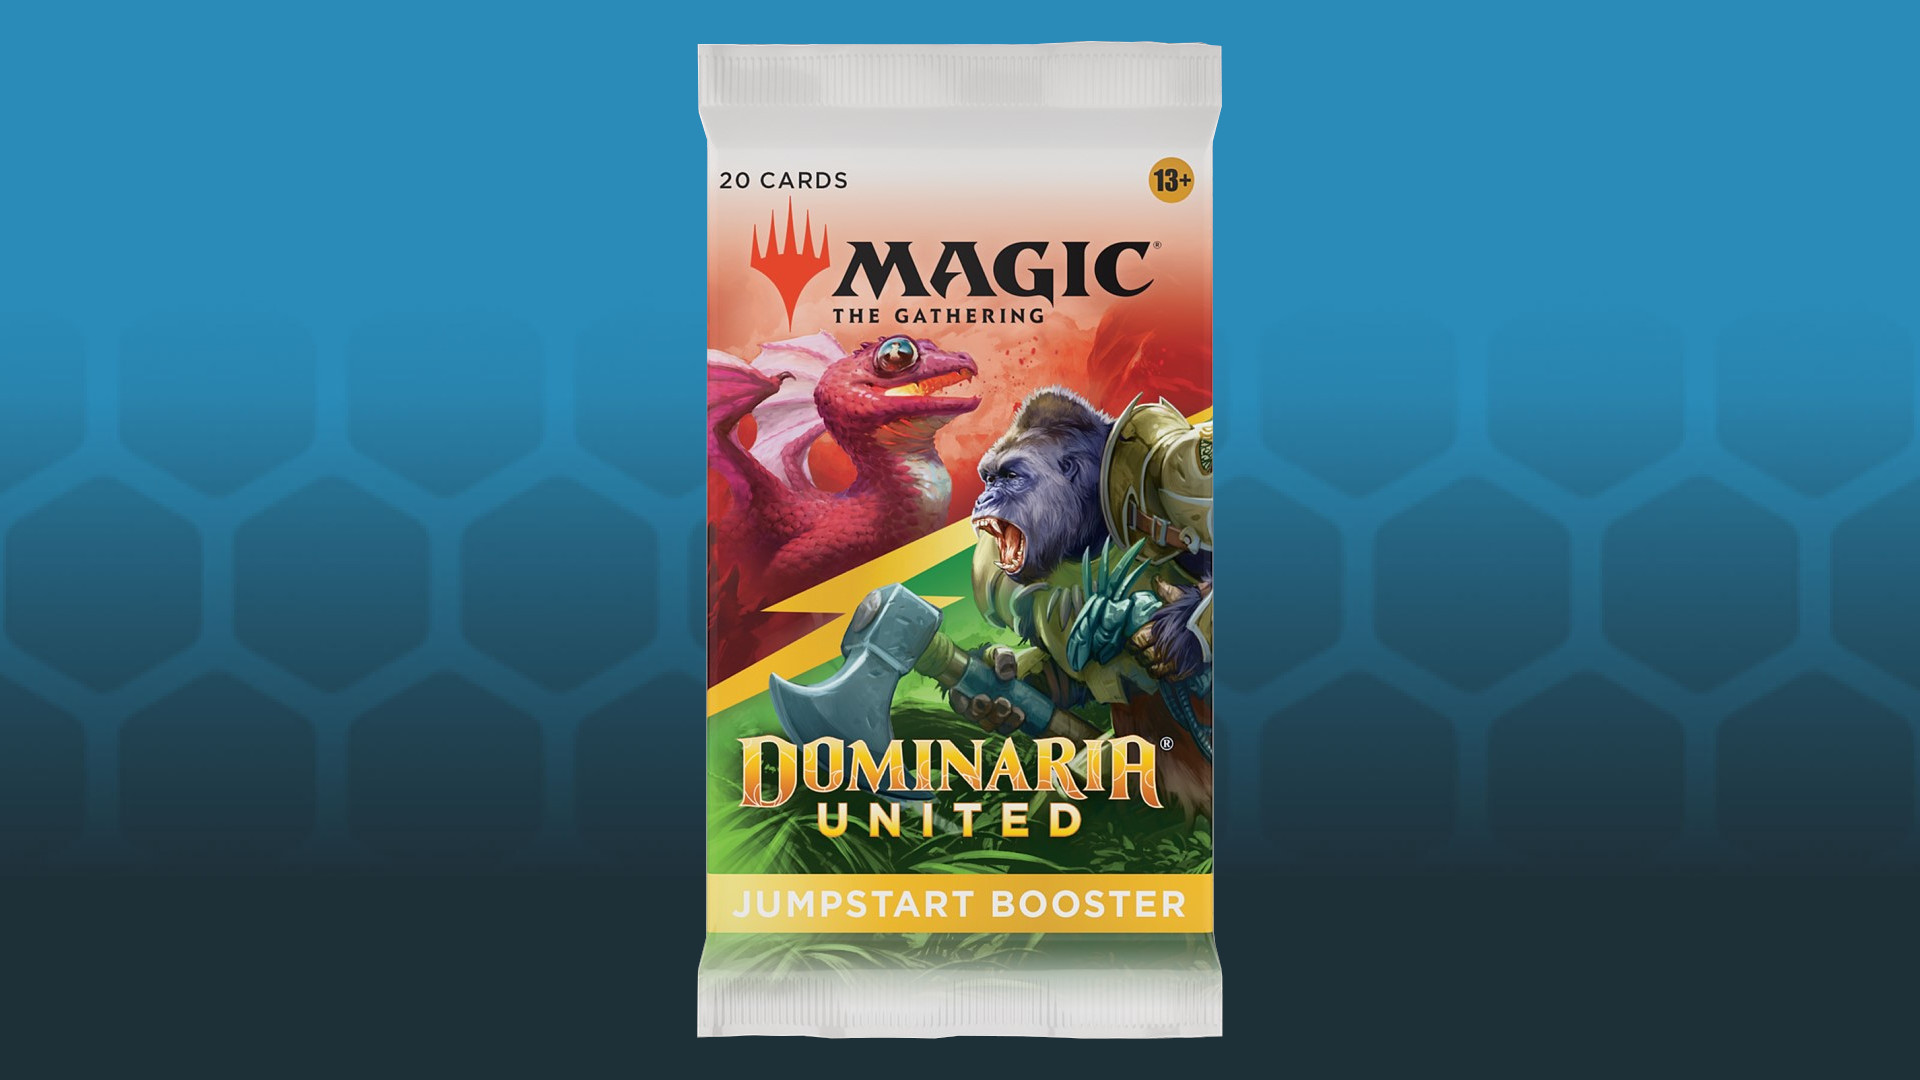 magic the gathering jumpstart beginner: a jumpstart Dominaria United pack on a Wargamer hex background